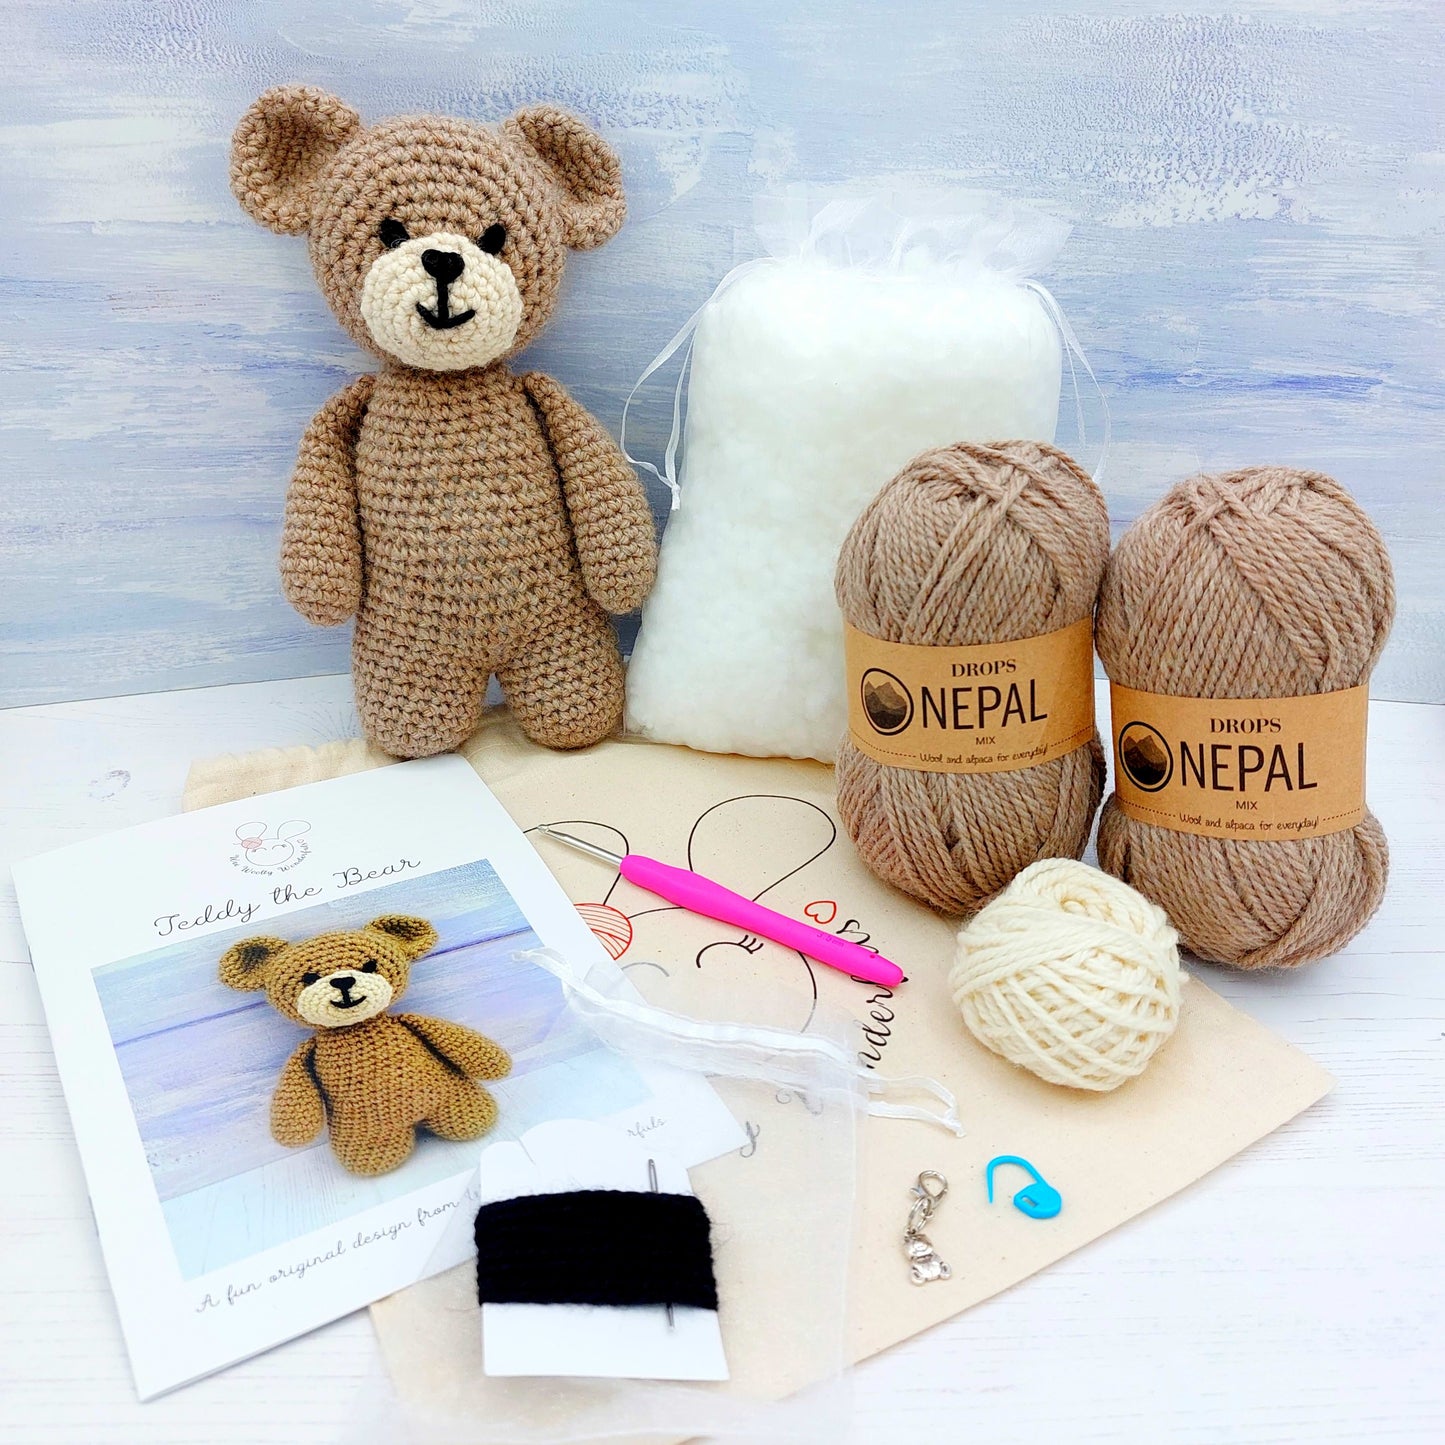 Teddy Bear Crochet Kit Contents - Wool, Patterns, hook, stuffing and yarn